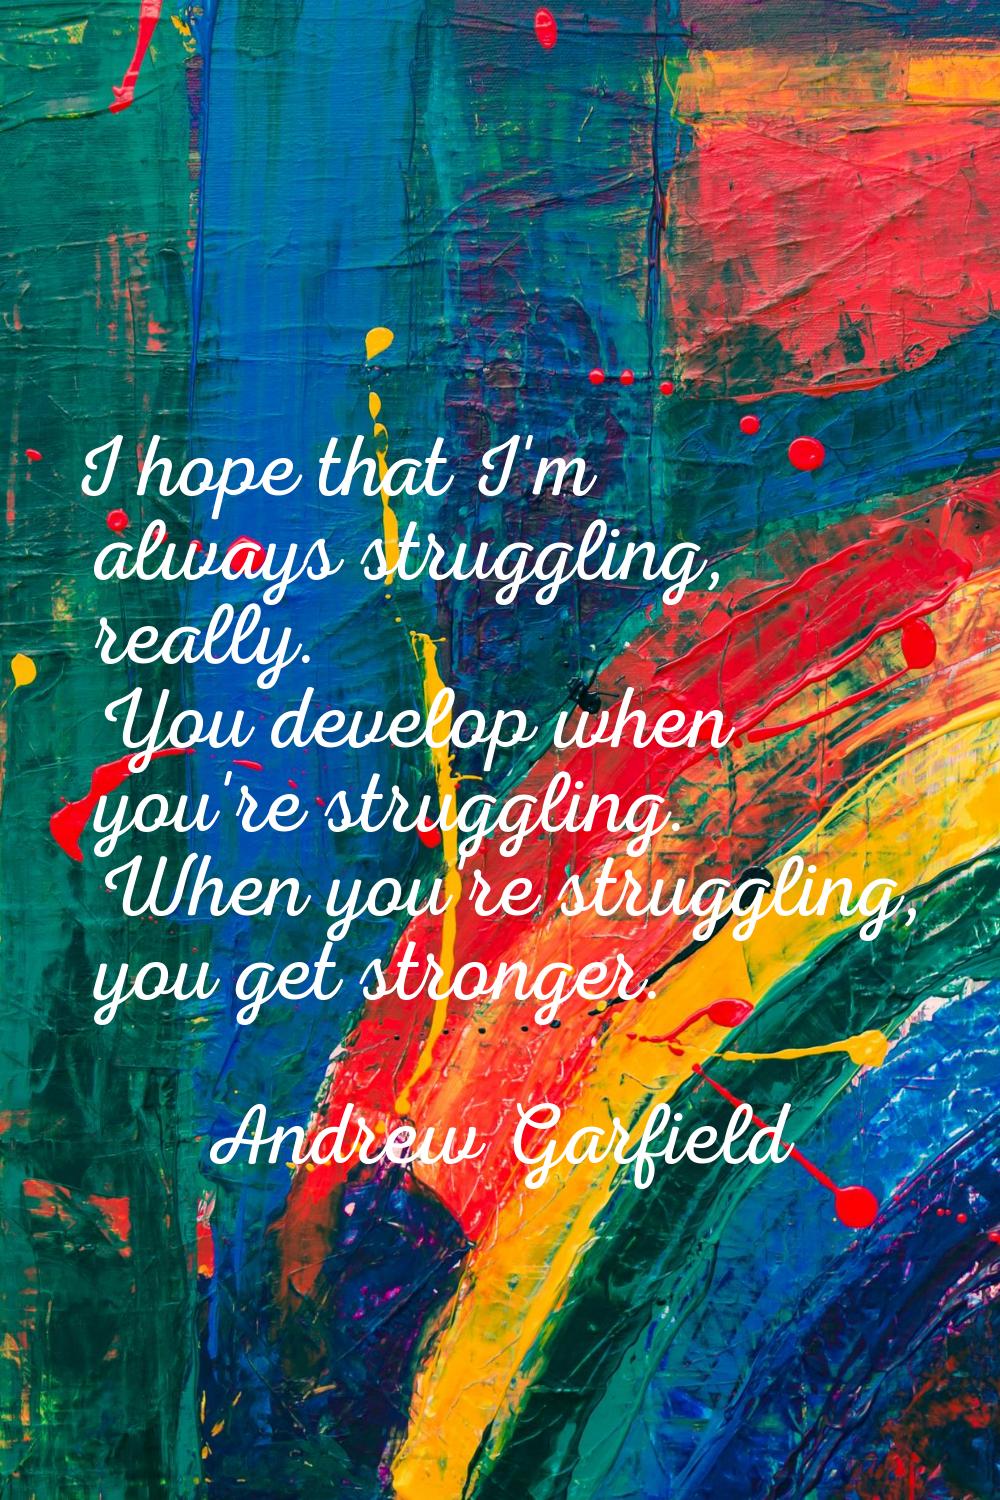 I hope that I'm always struggling, really. You develop when you're struggling. When you're struggli